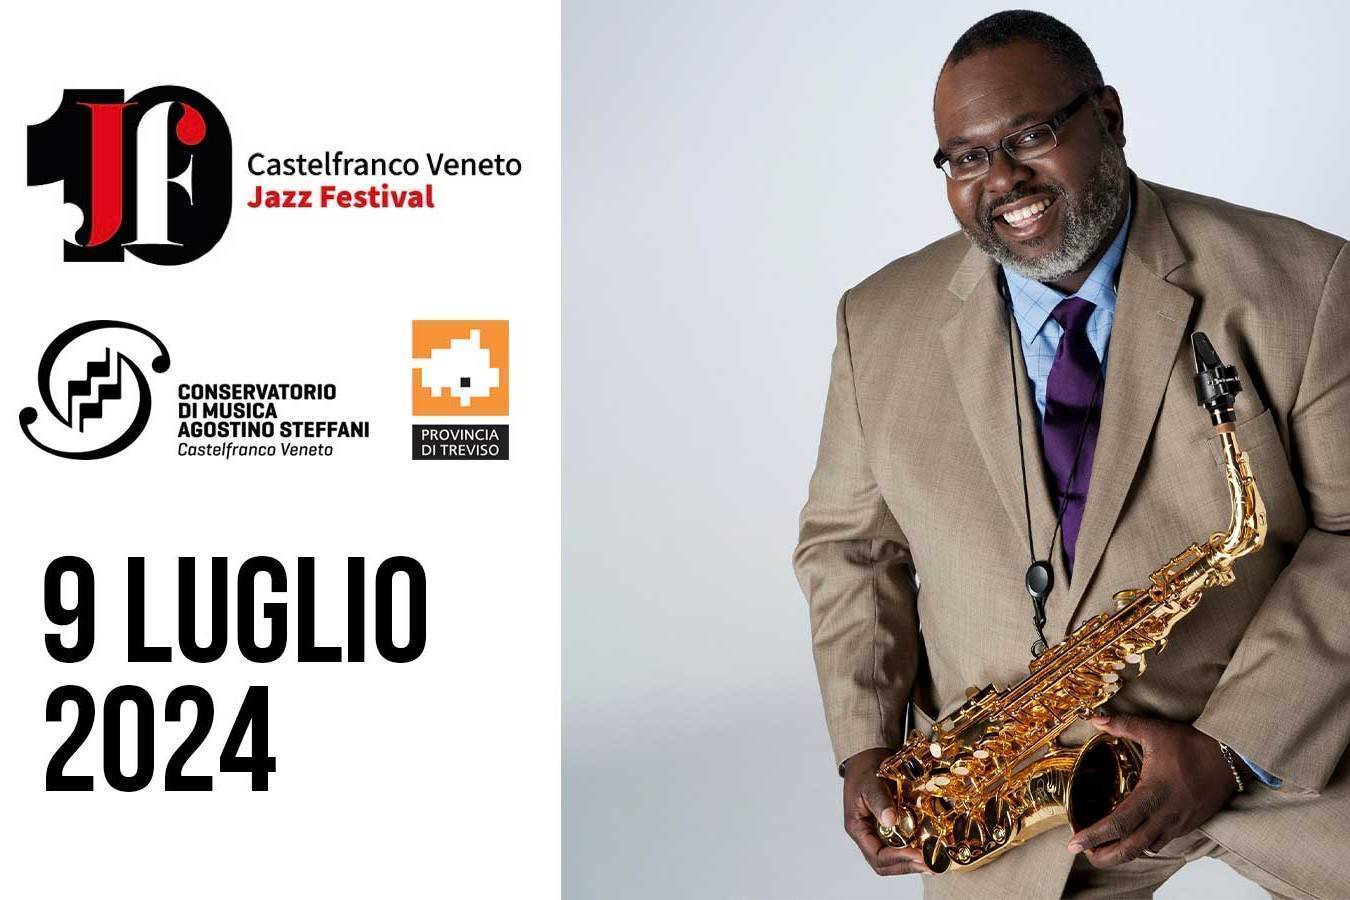 Castelfranco Veneto Jazz festival